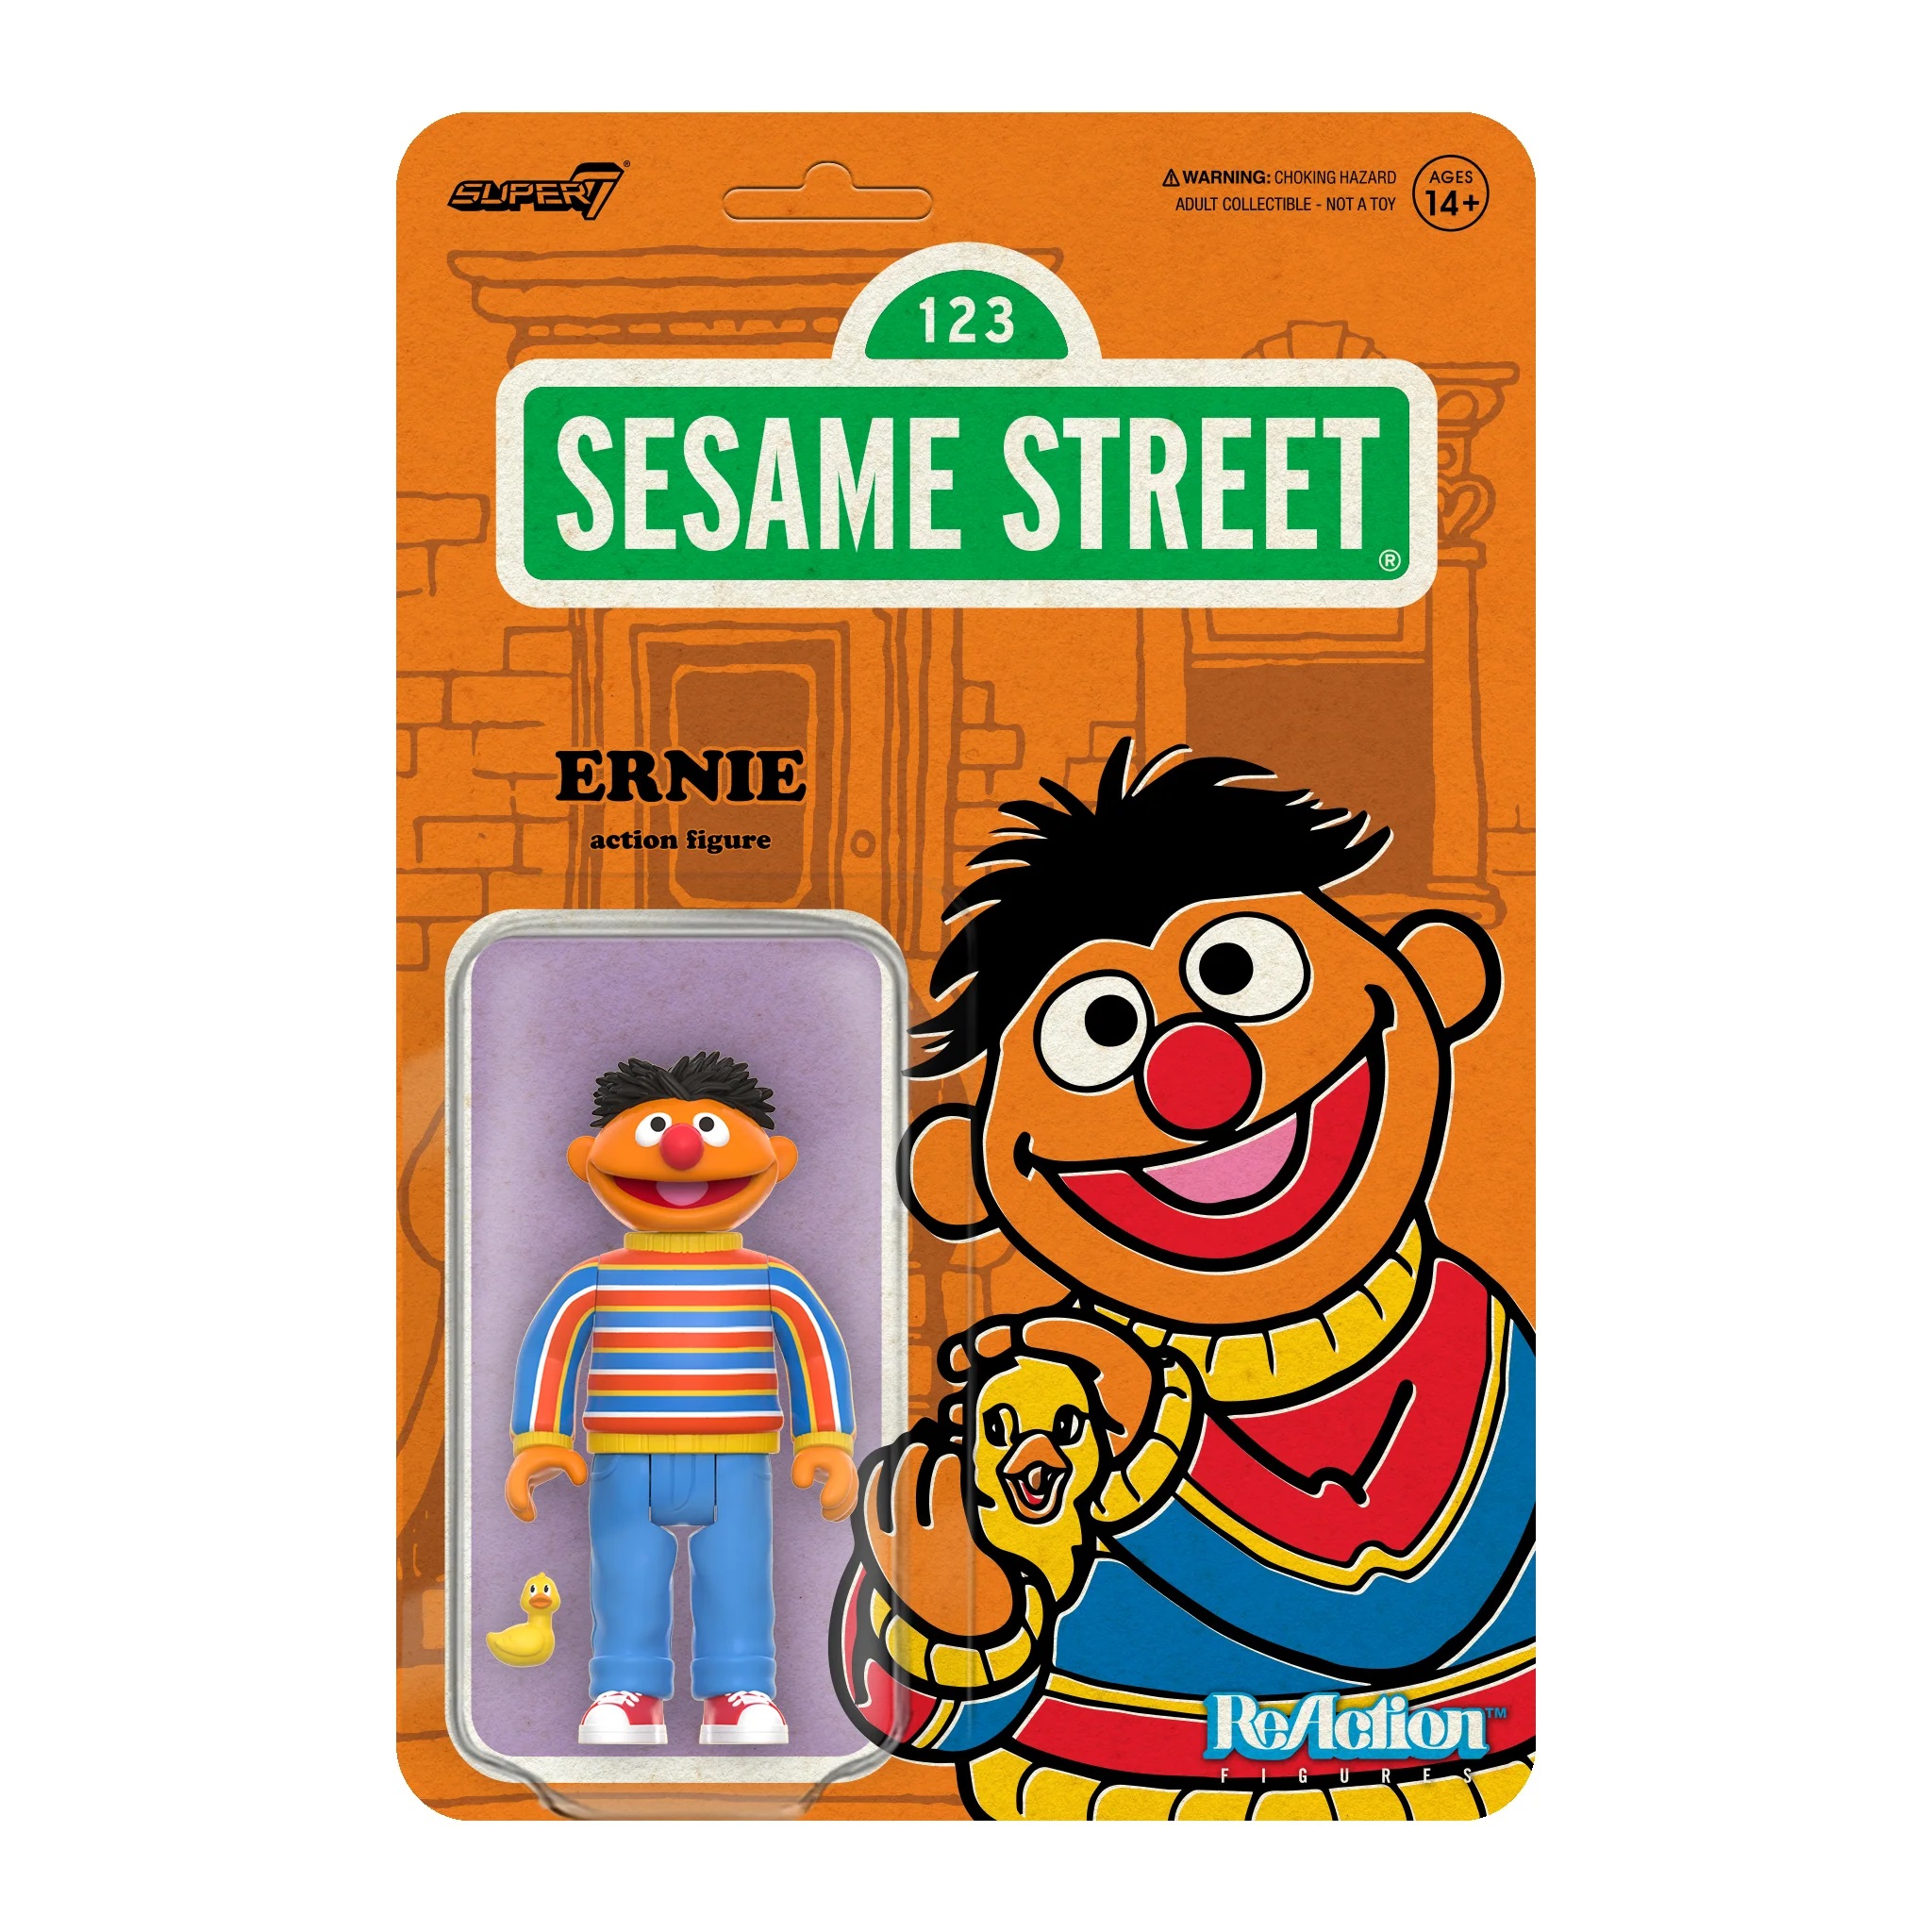 Super7-Sesame%20Street-ReAction-Wave%201-Ernie-01.jpg